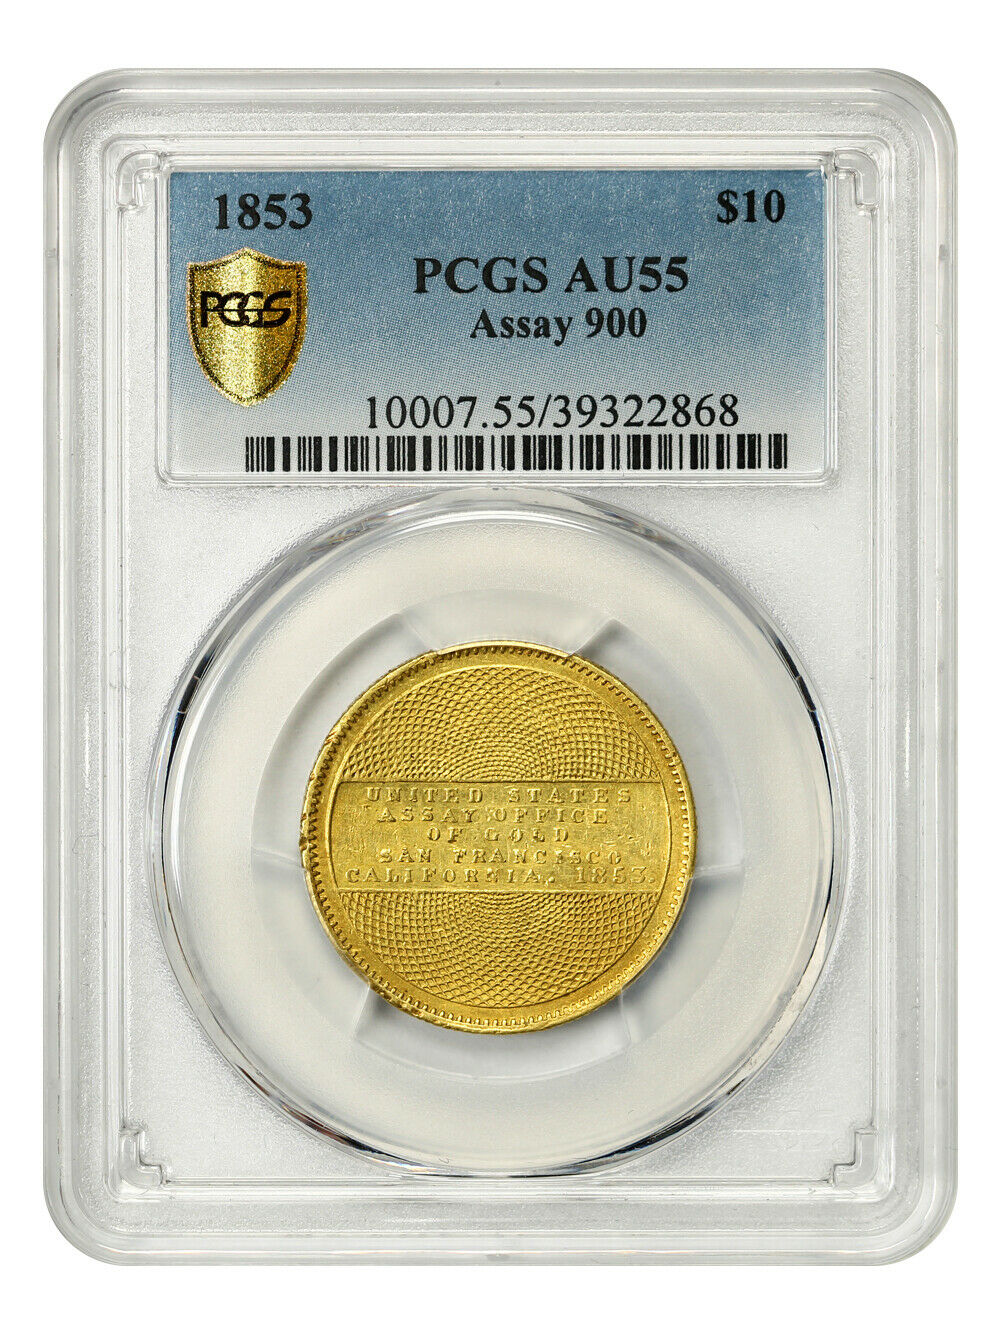 1853 U.s Assay $10 Pcgs Au55 (900 Thous) Lovely Assay $10 - Lovely Assay $10